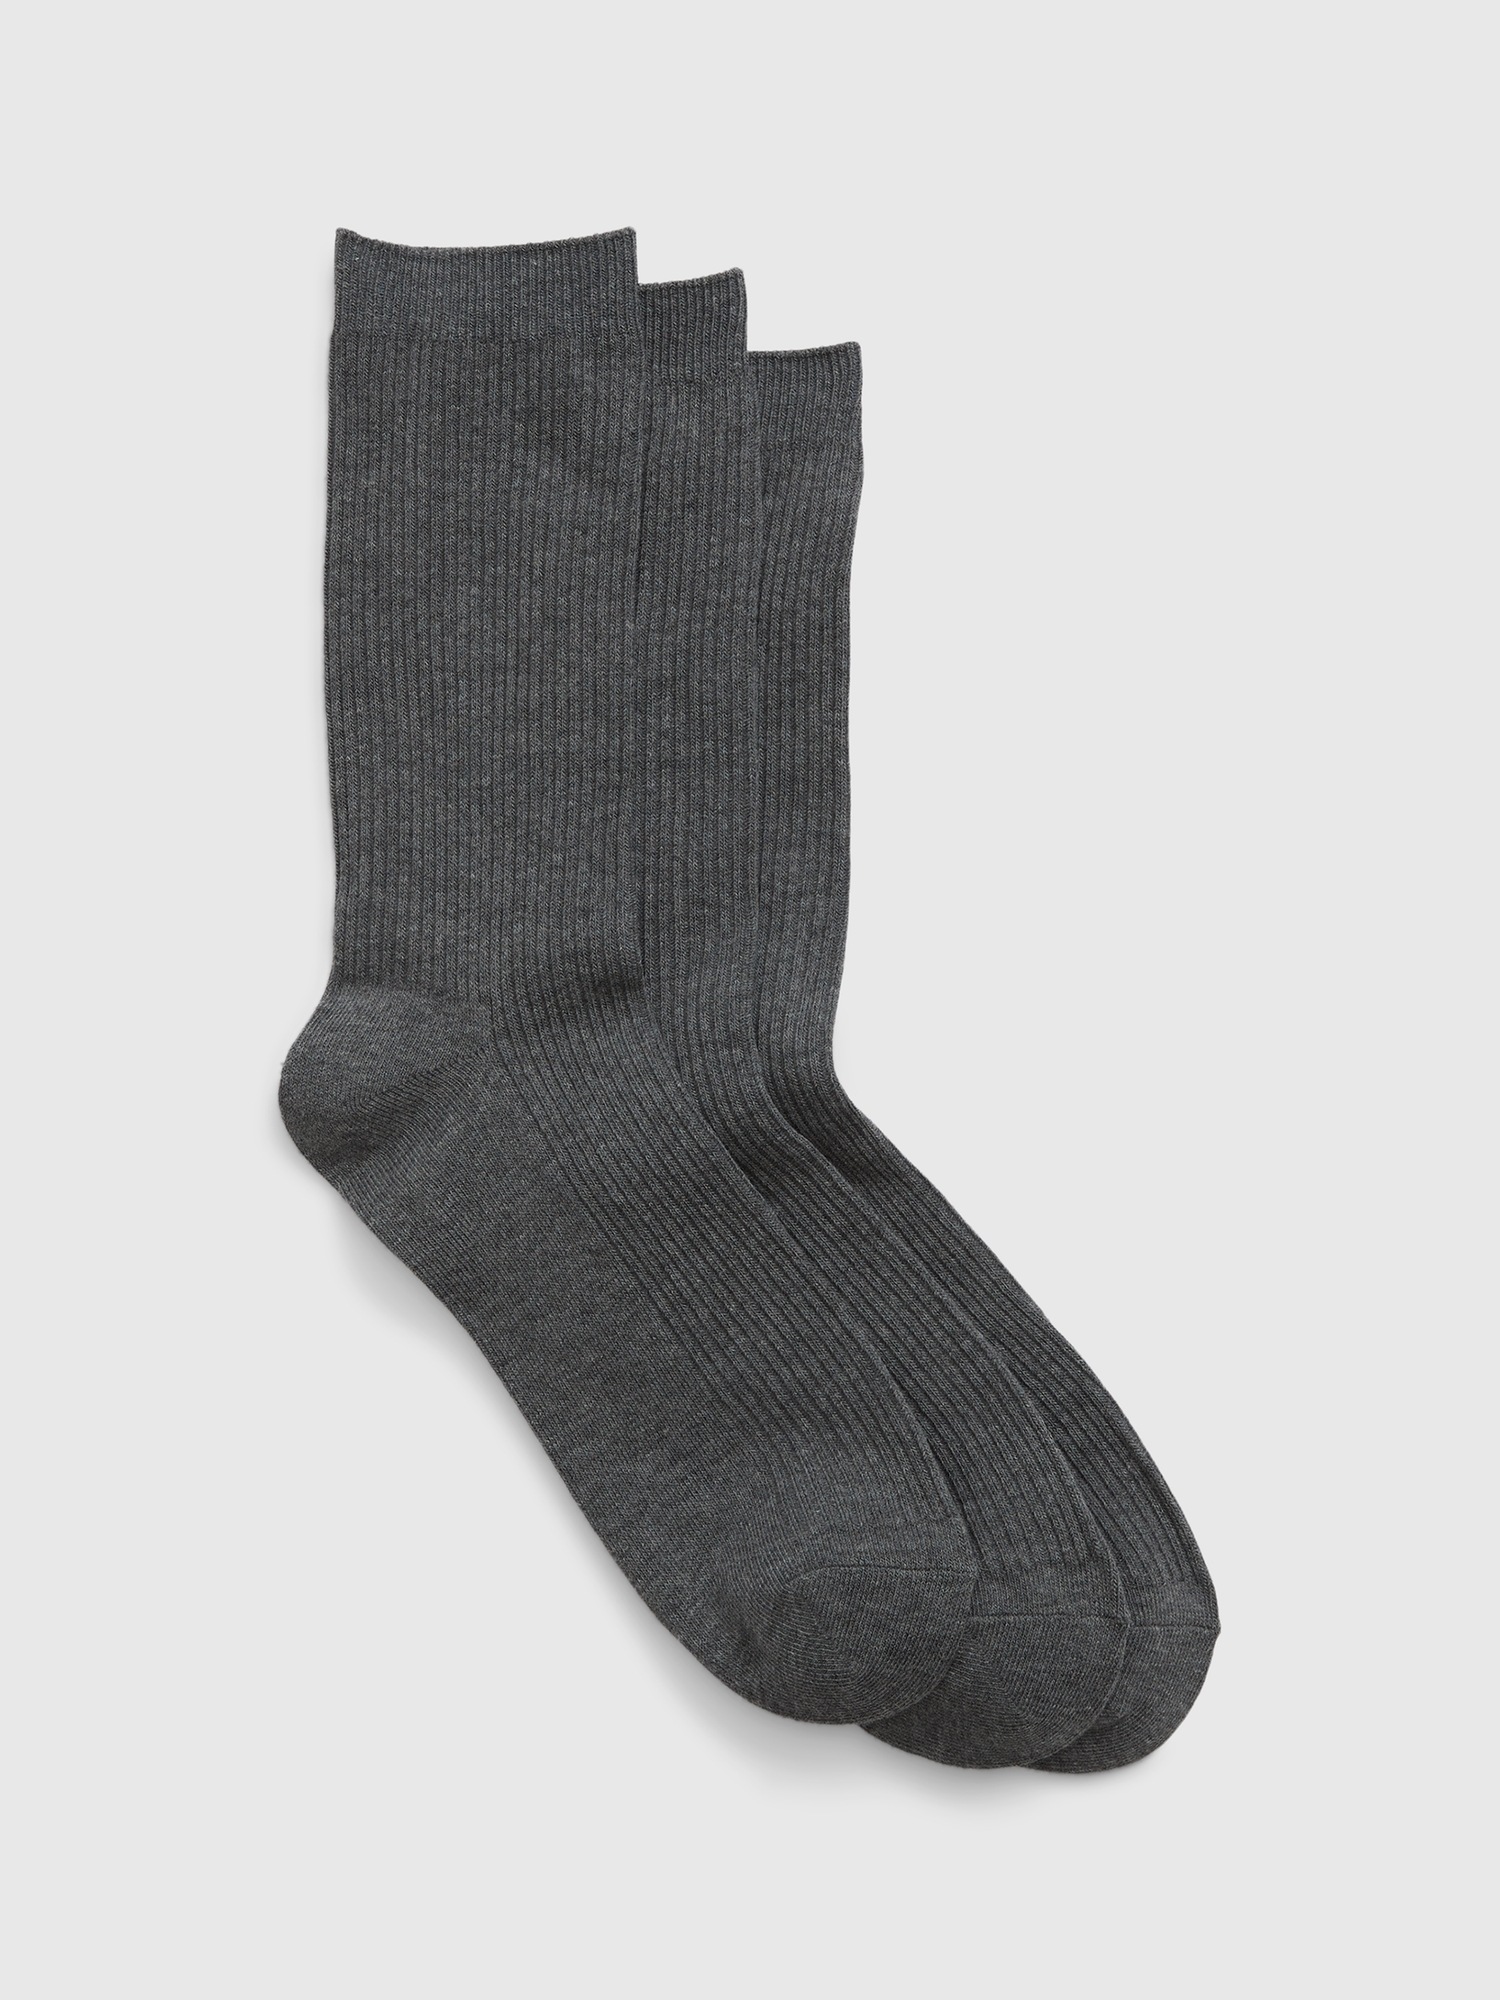 GAP High socks, 3 pairs - Men